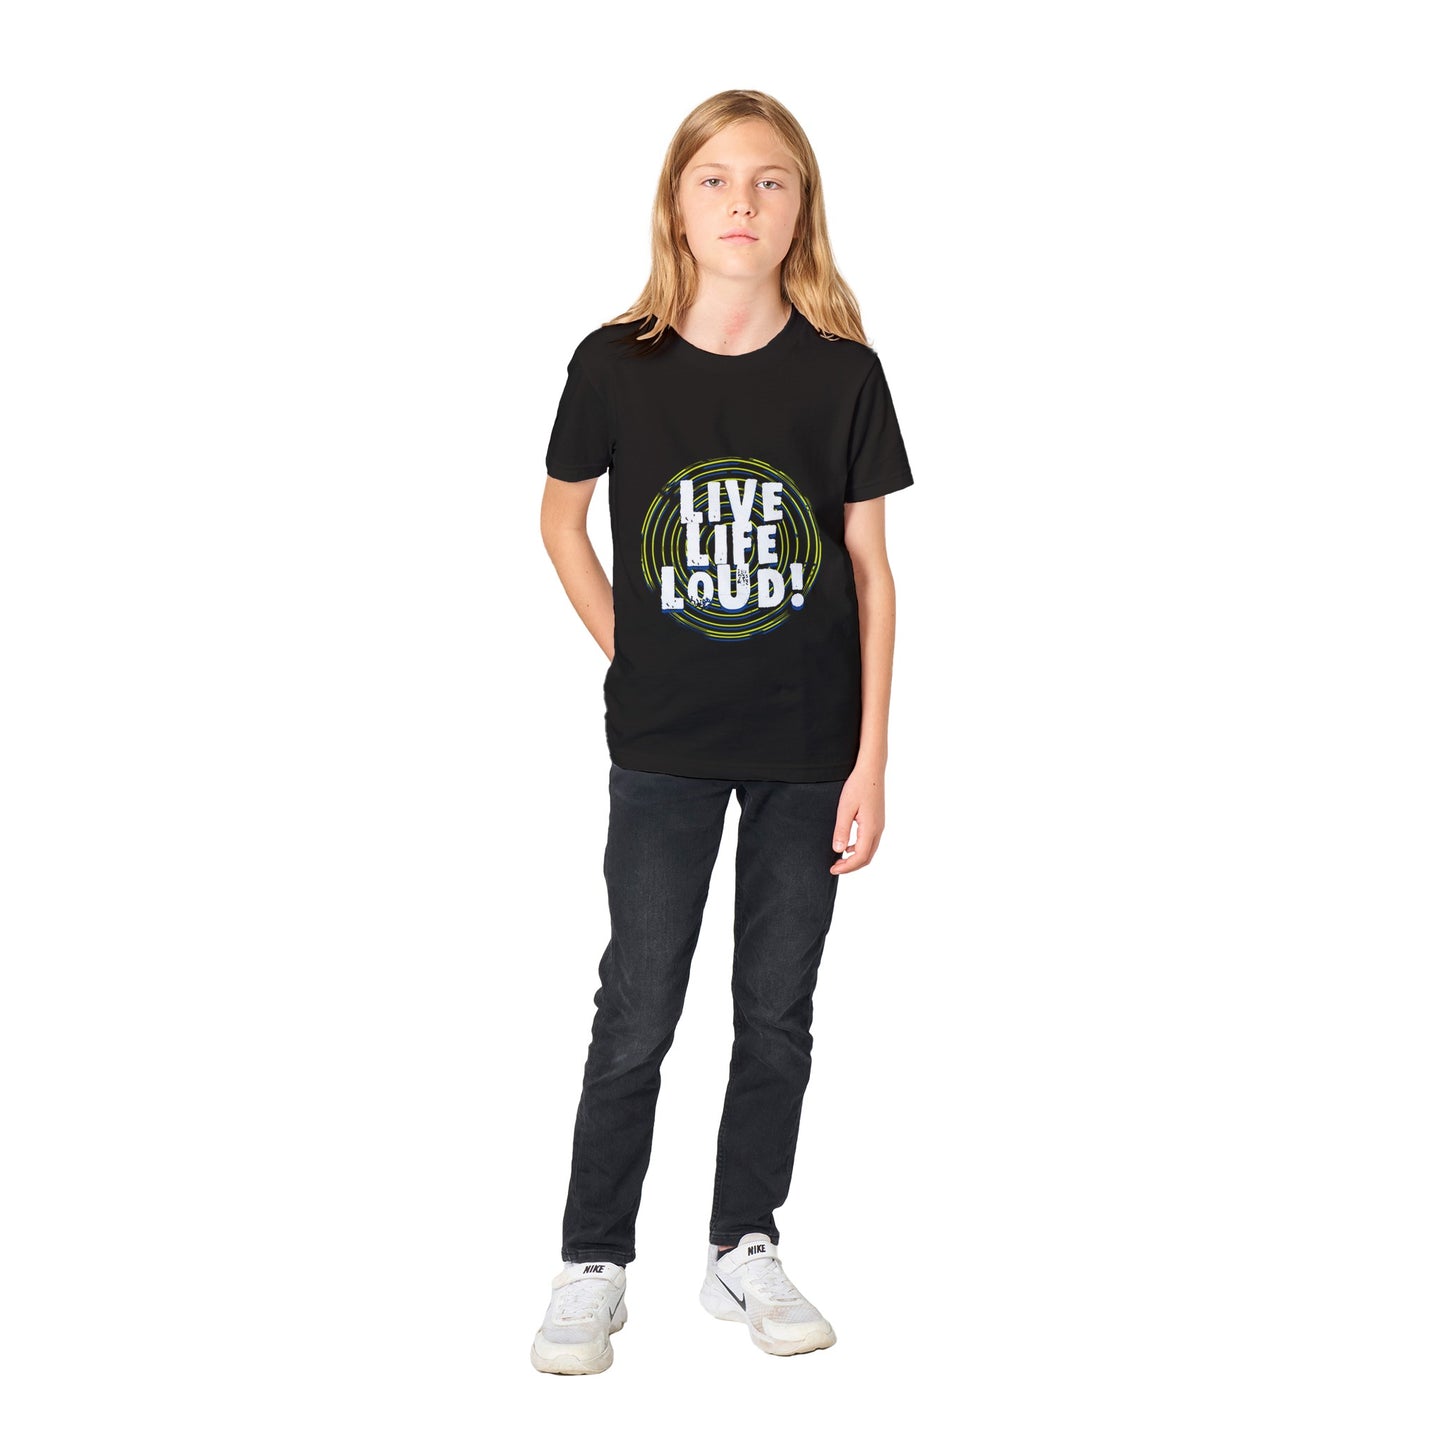 Live Life Loud Green Premium Kids Crewneck T-shirt